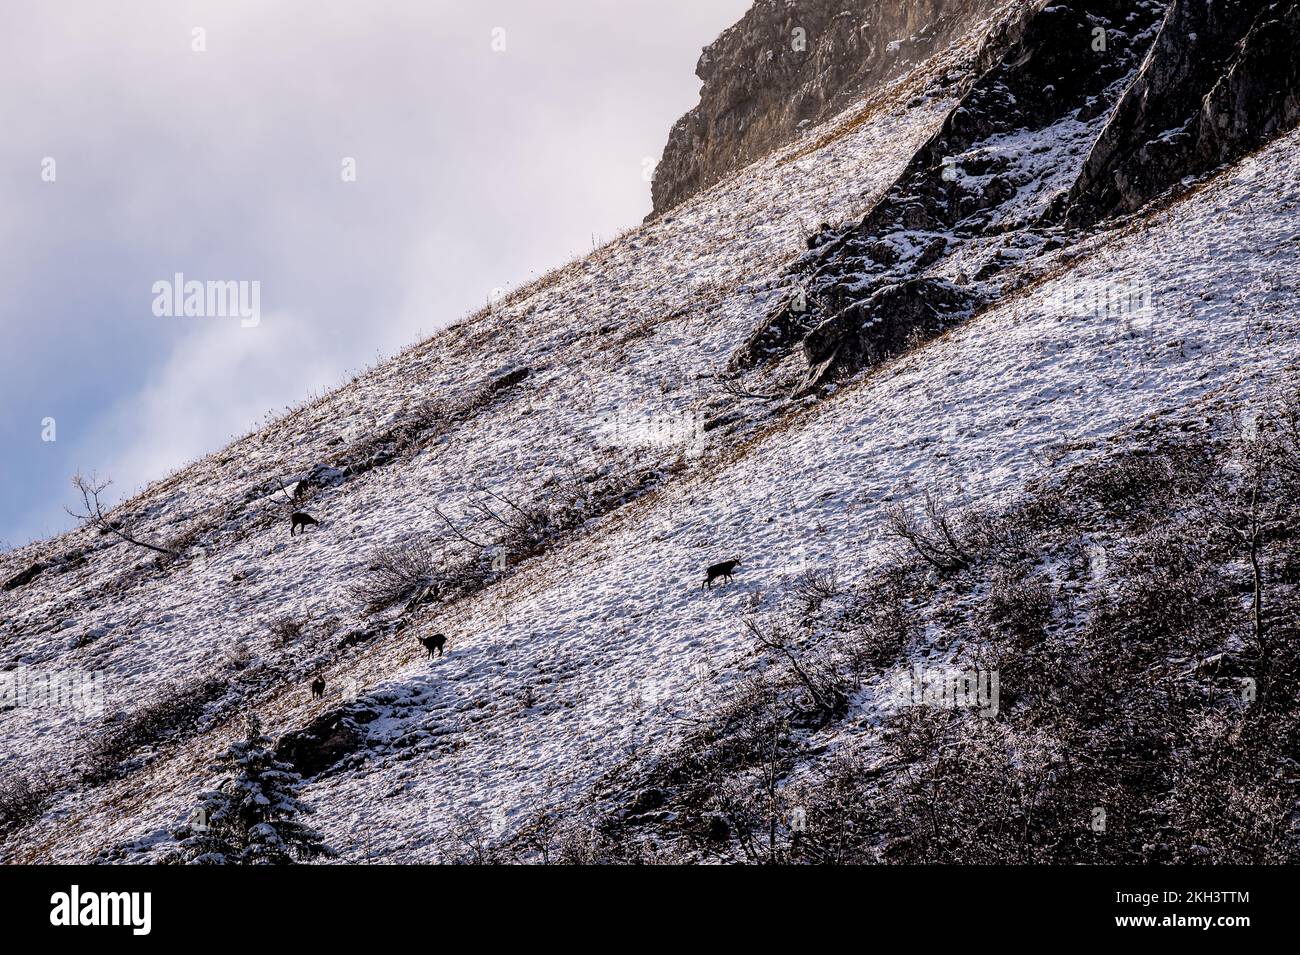 Chamois in mountain. Rupicapra rupicapra in natural environment in winter. La Dole, Vaud Canton, Switzerland. Stock Photo